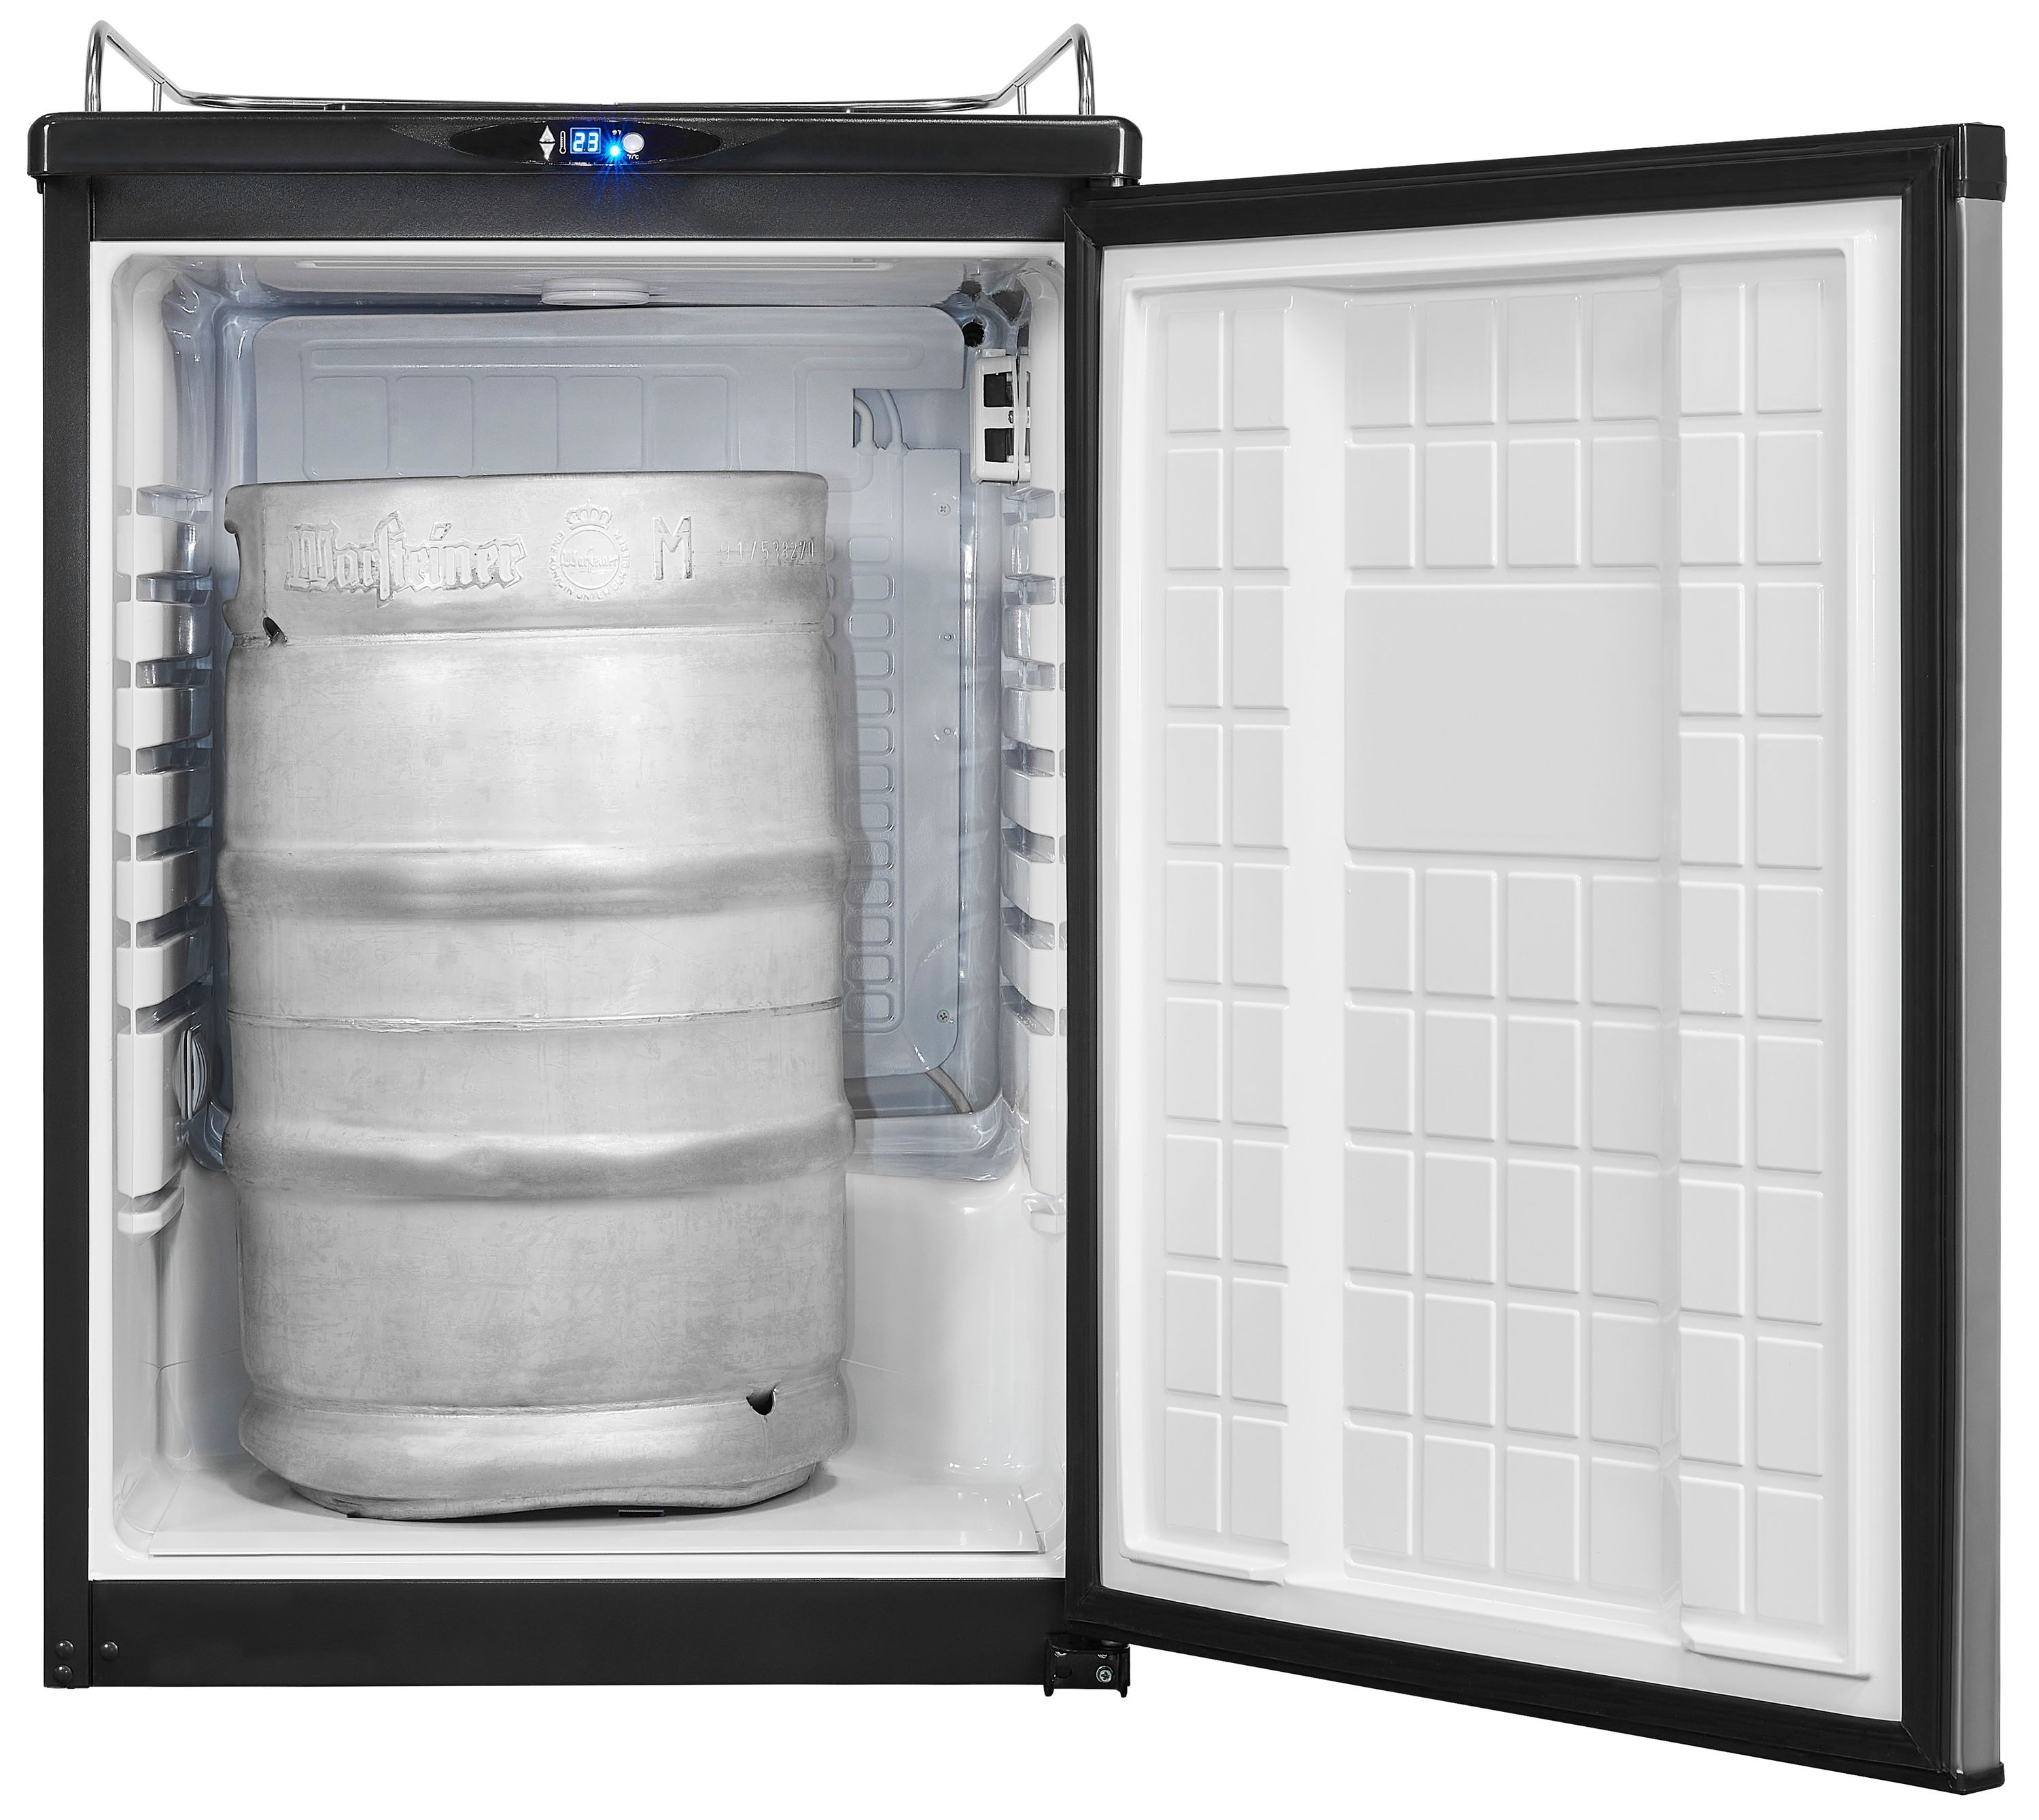 Biertap koelkast Exquisit BK 160 met rvs front deur 2 kraans